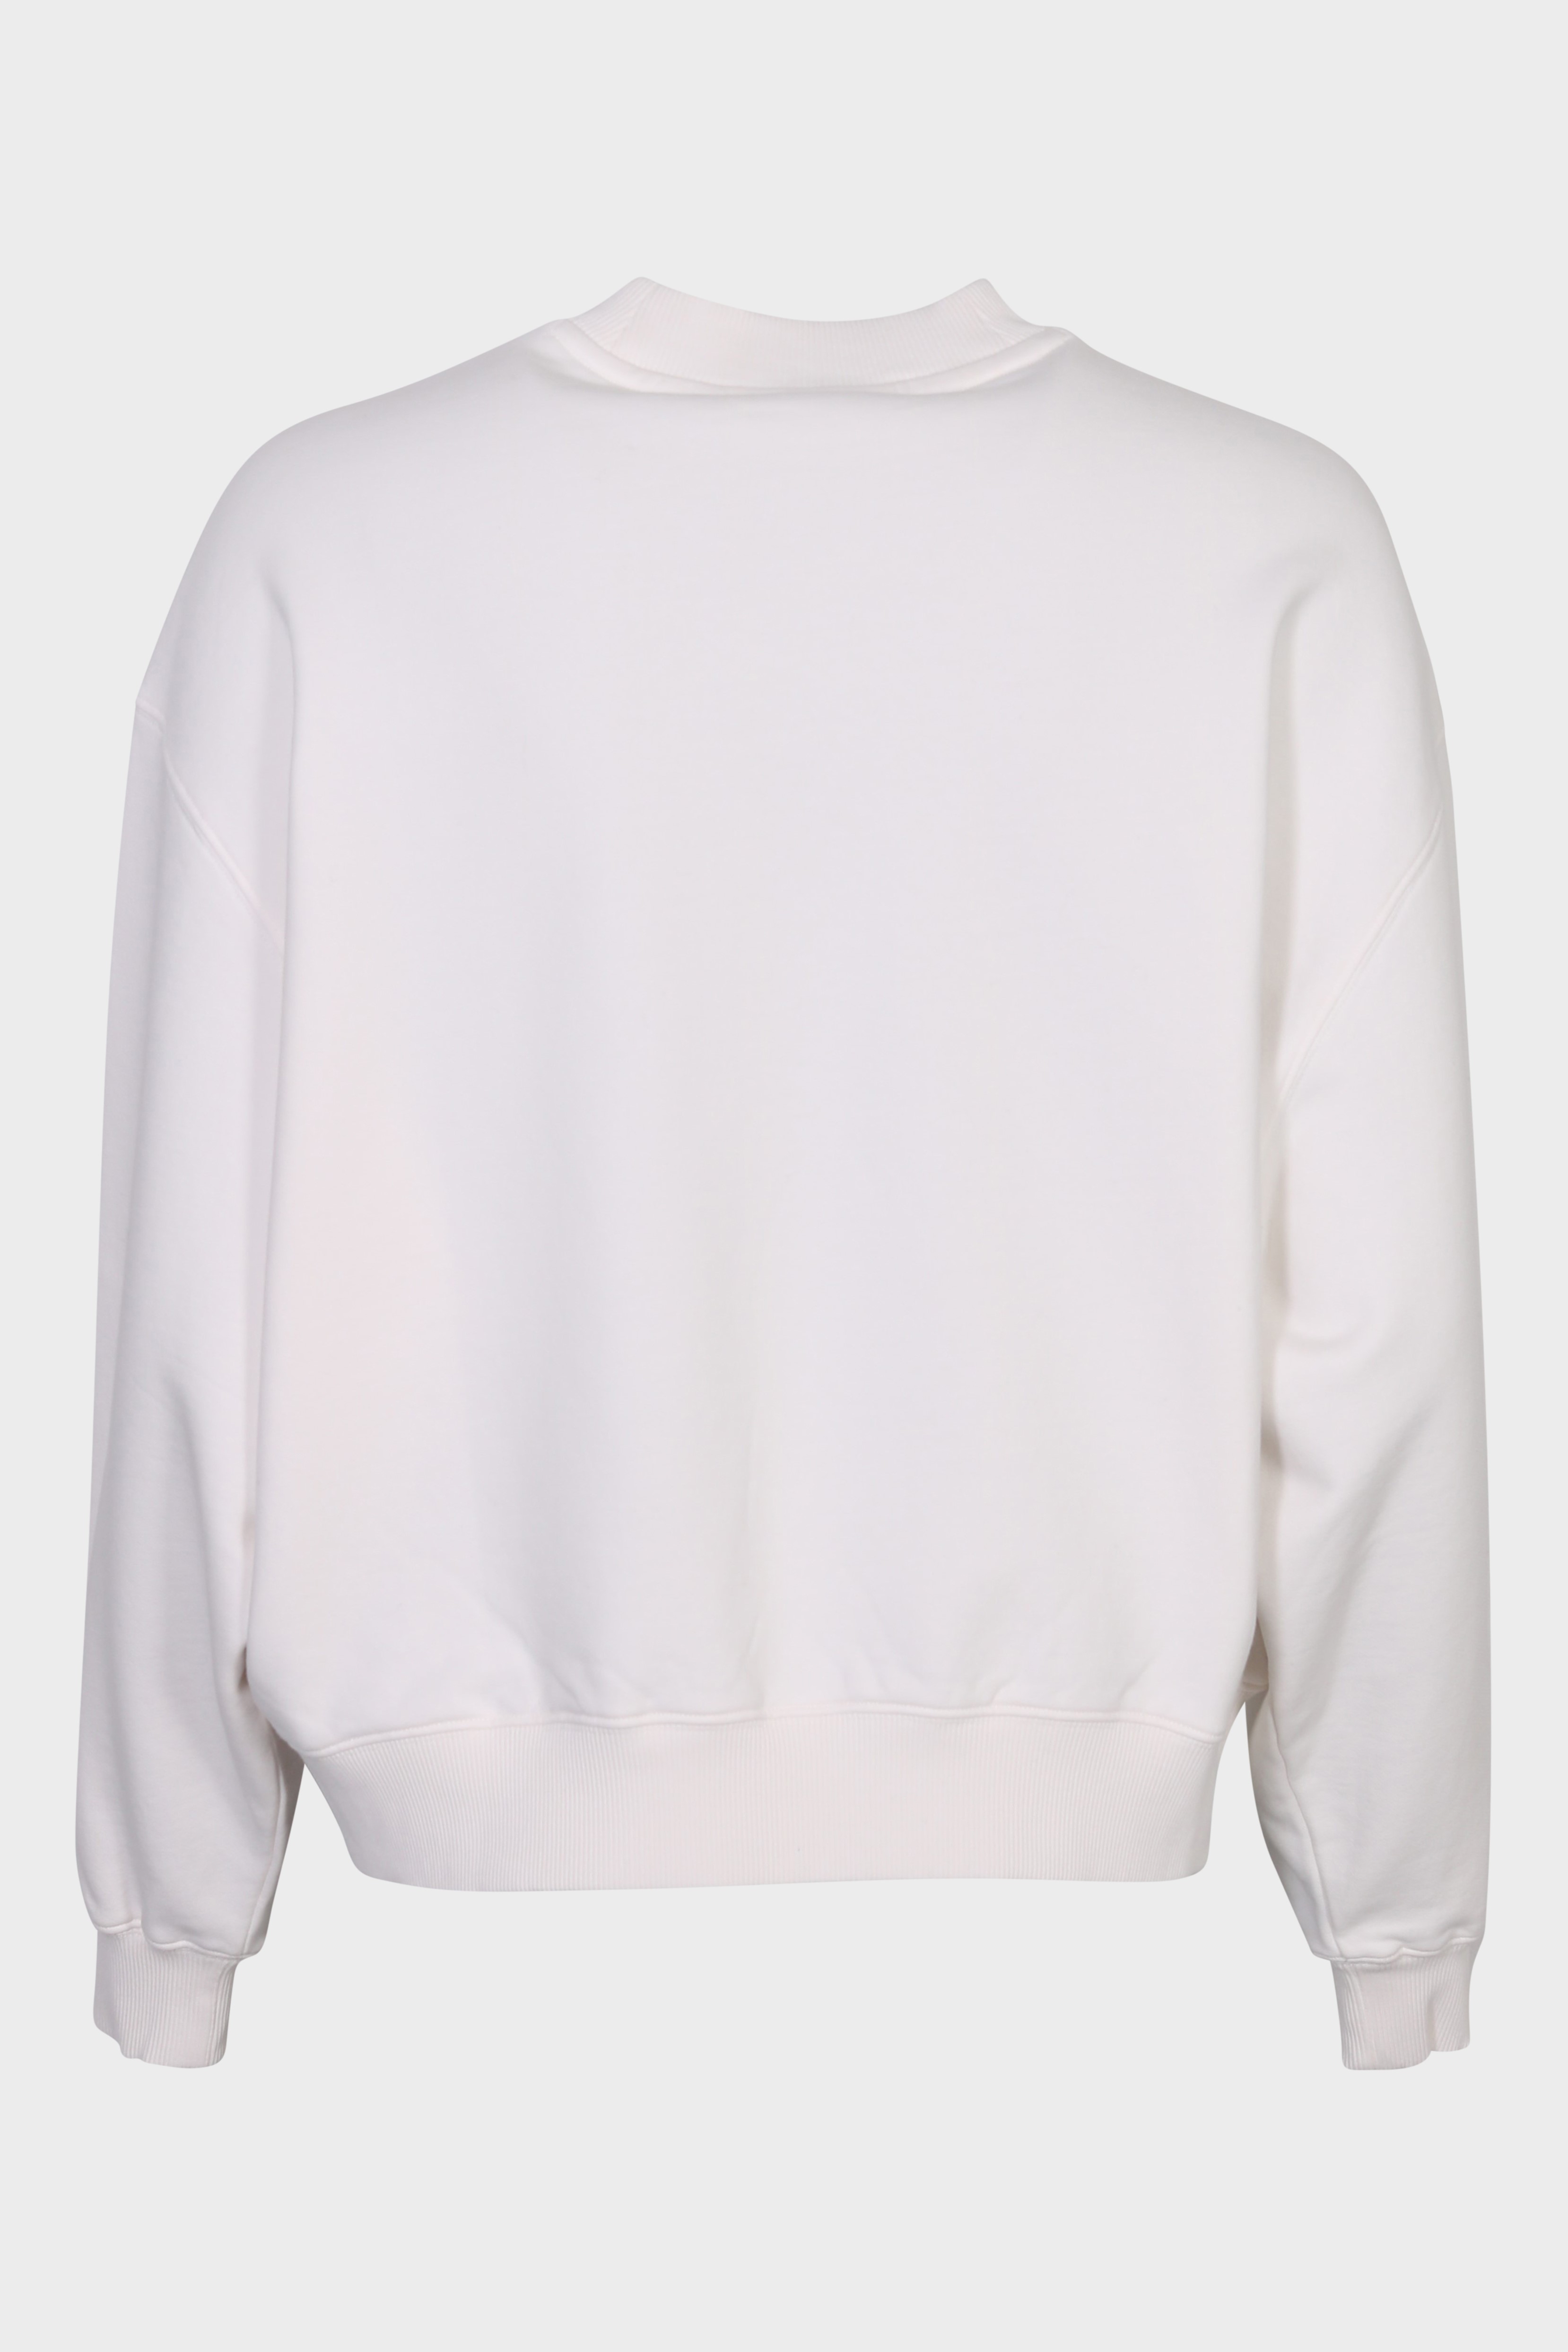 AXEL ARIGATO University Sweatshirt in Off White